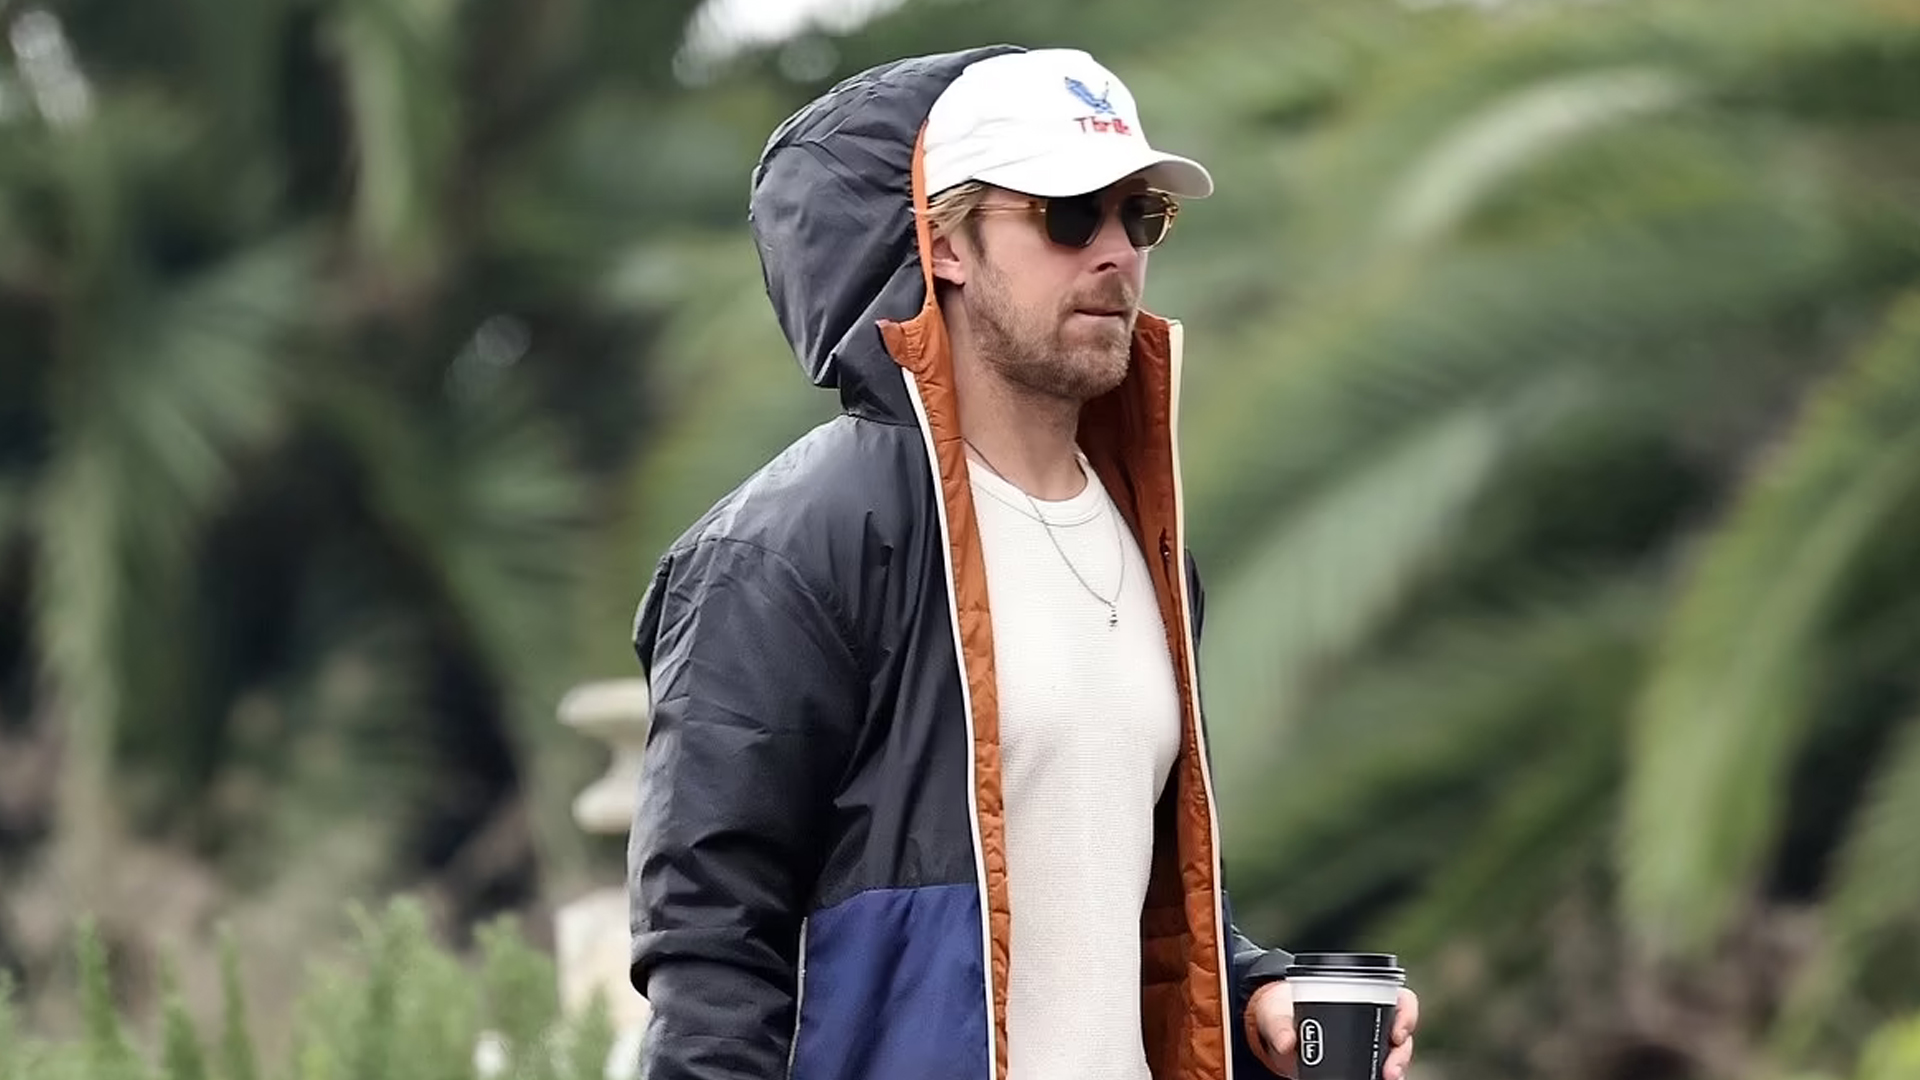 Ryan Gosling Spotted Grabbing Lunch In Santa Barbara!